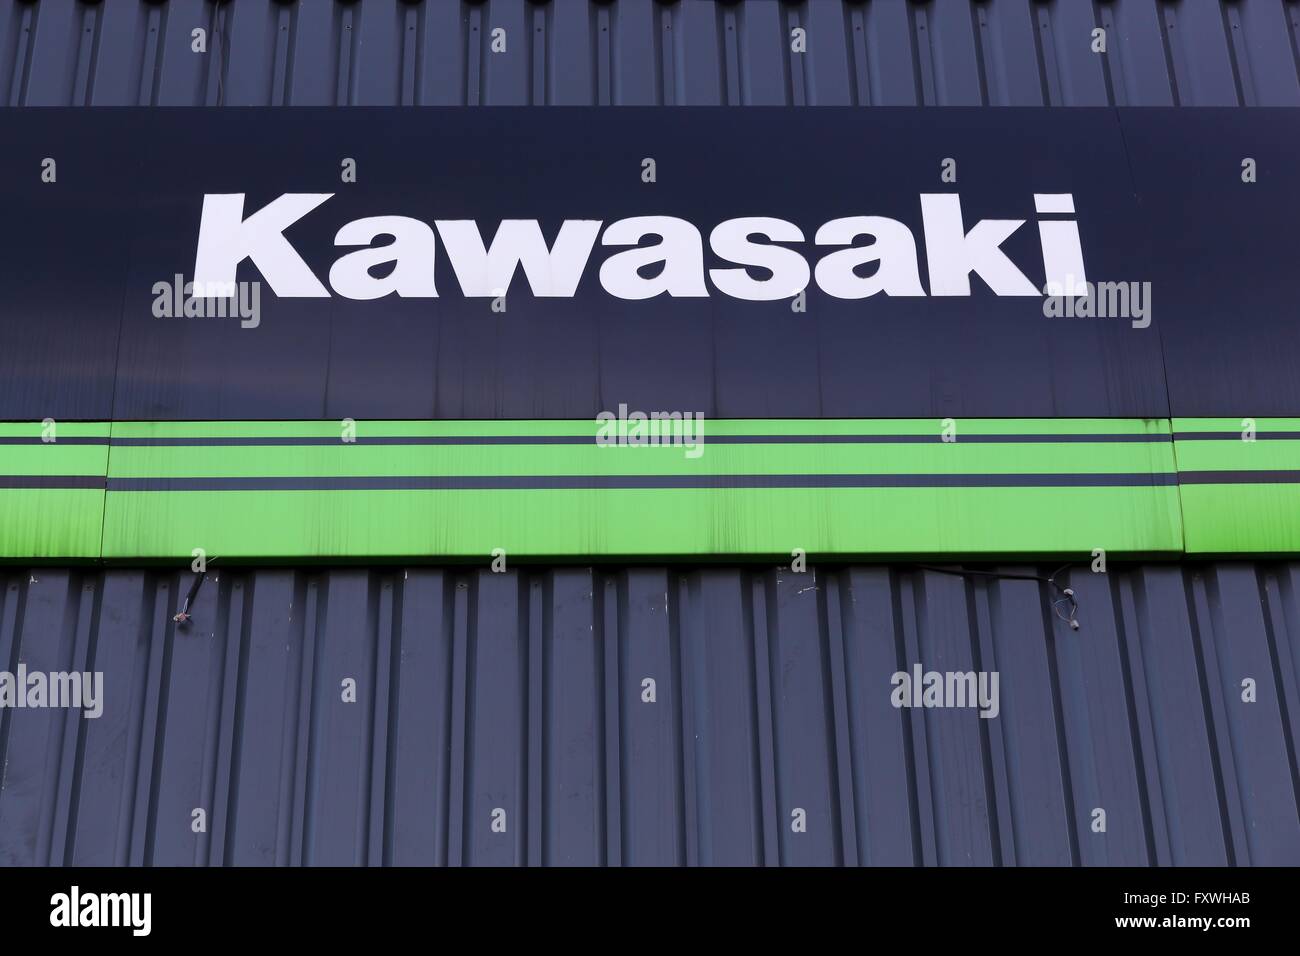 Kawasaki logo on a wall Stock Photo